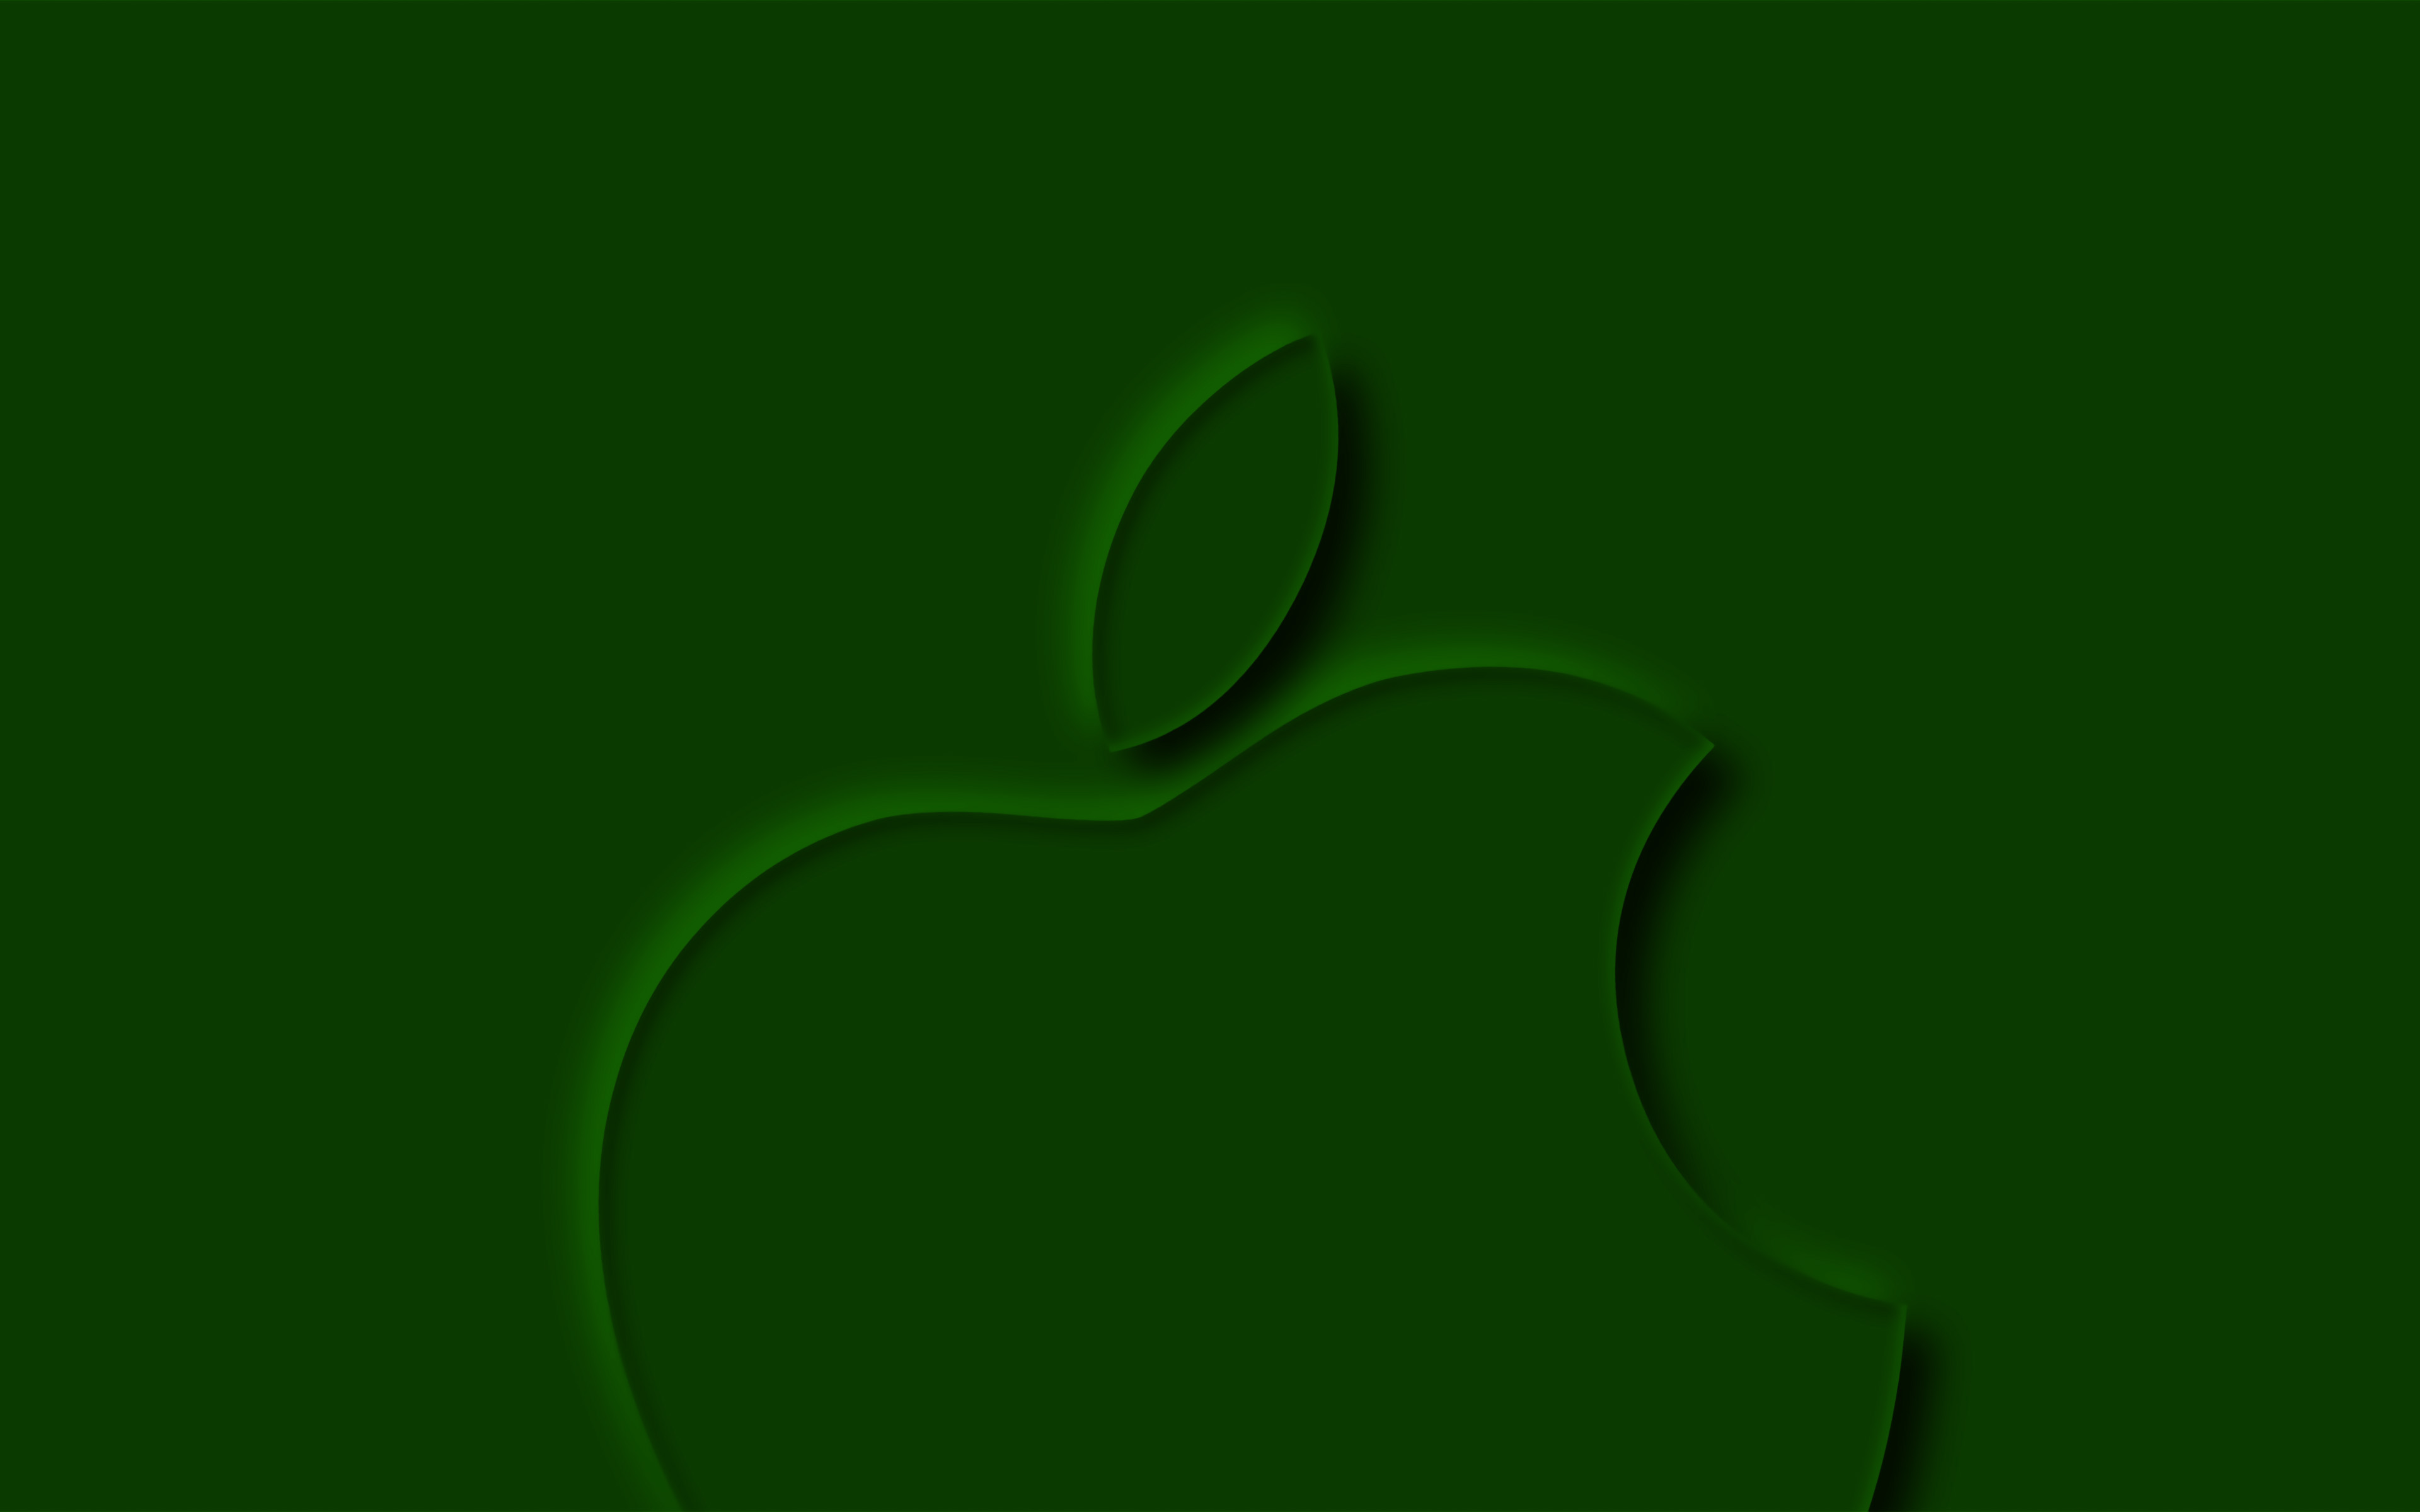 apple logo verde, 4k, criativo, m&#237;nimo, fundos verdes, apple logo 3d, apple minimalismo, apple logo, apple